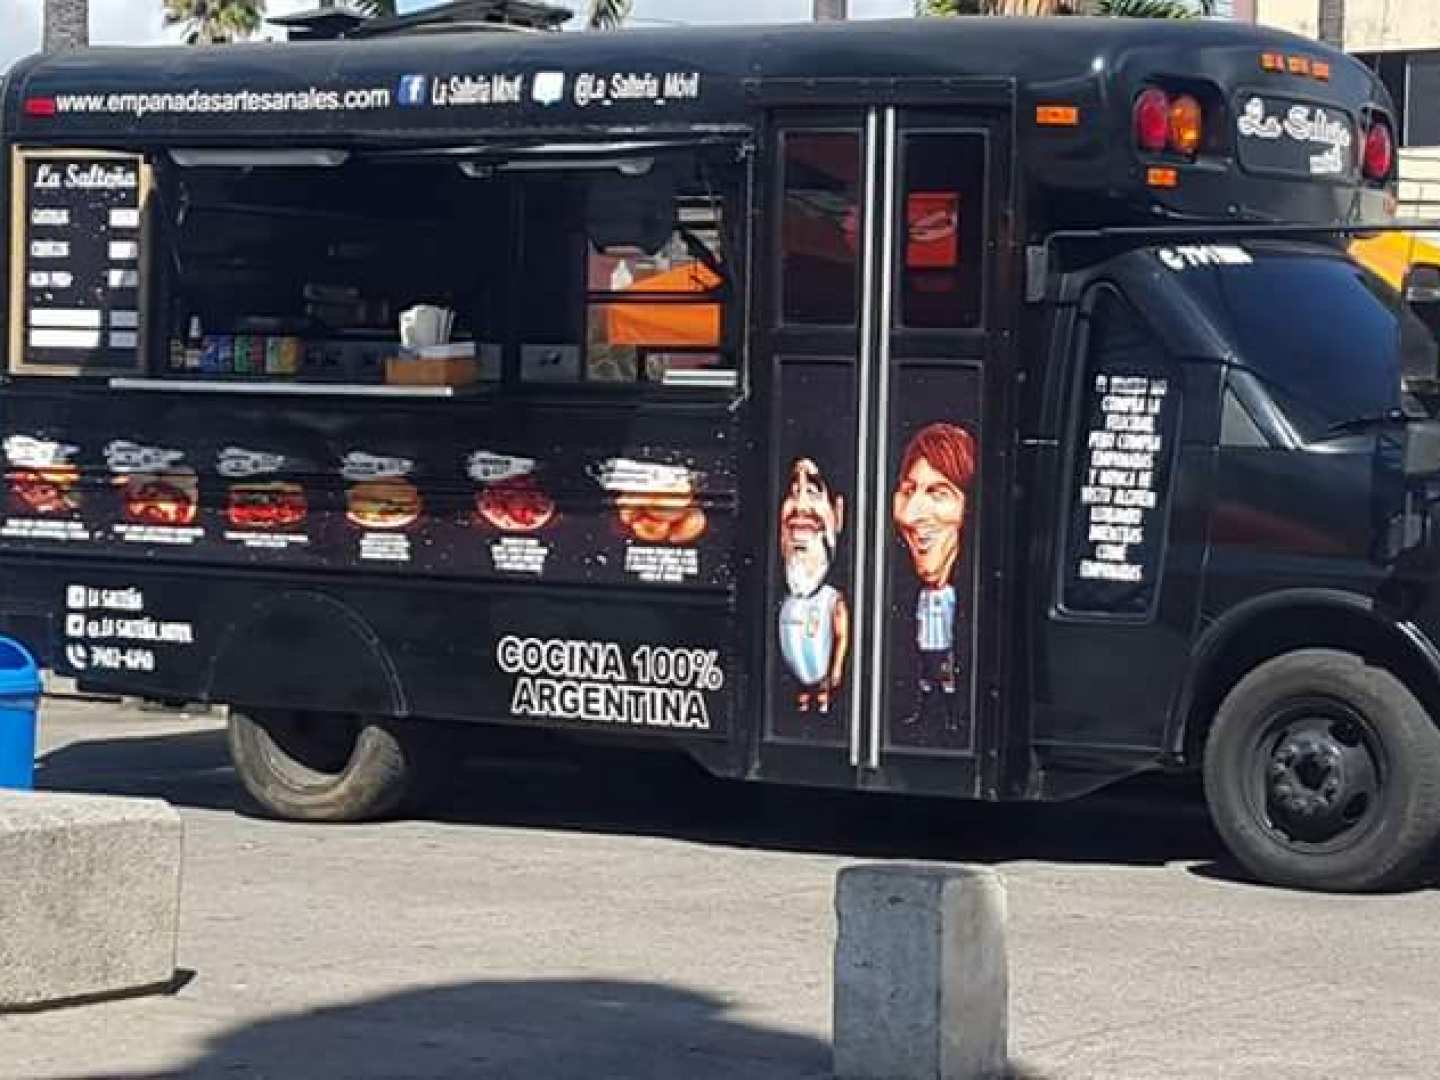 La Salteña (Food Truck)